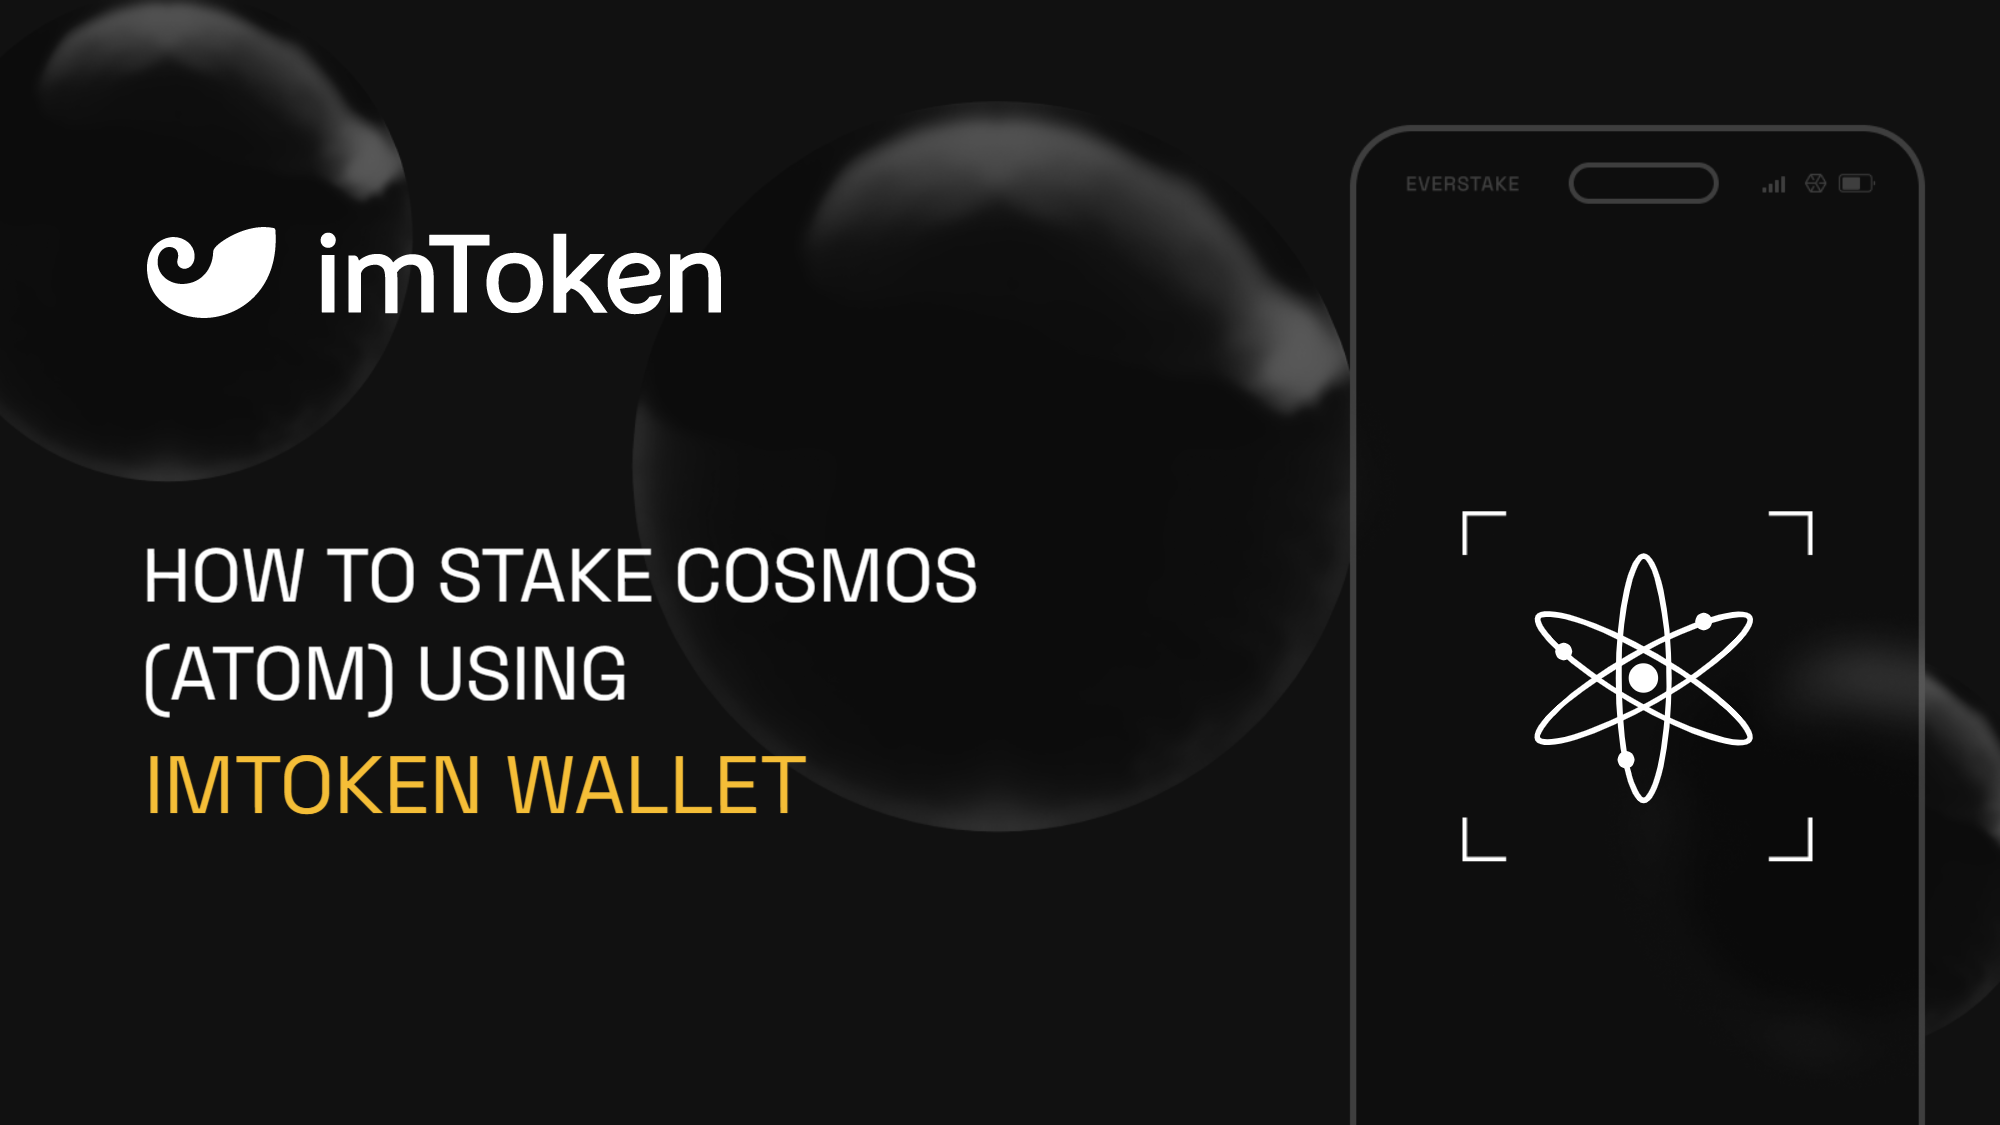 How to stake Cosmos (ATOM) via the ImToken mobile wallet